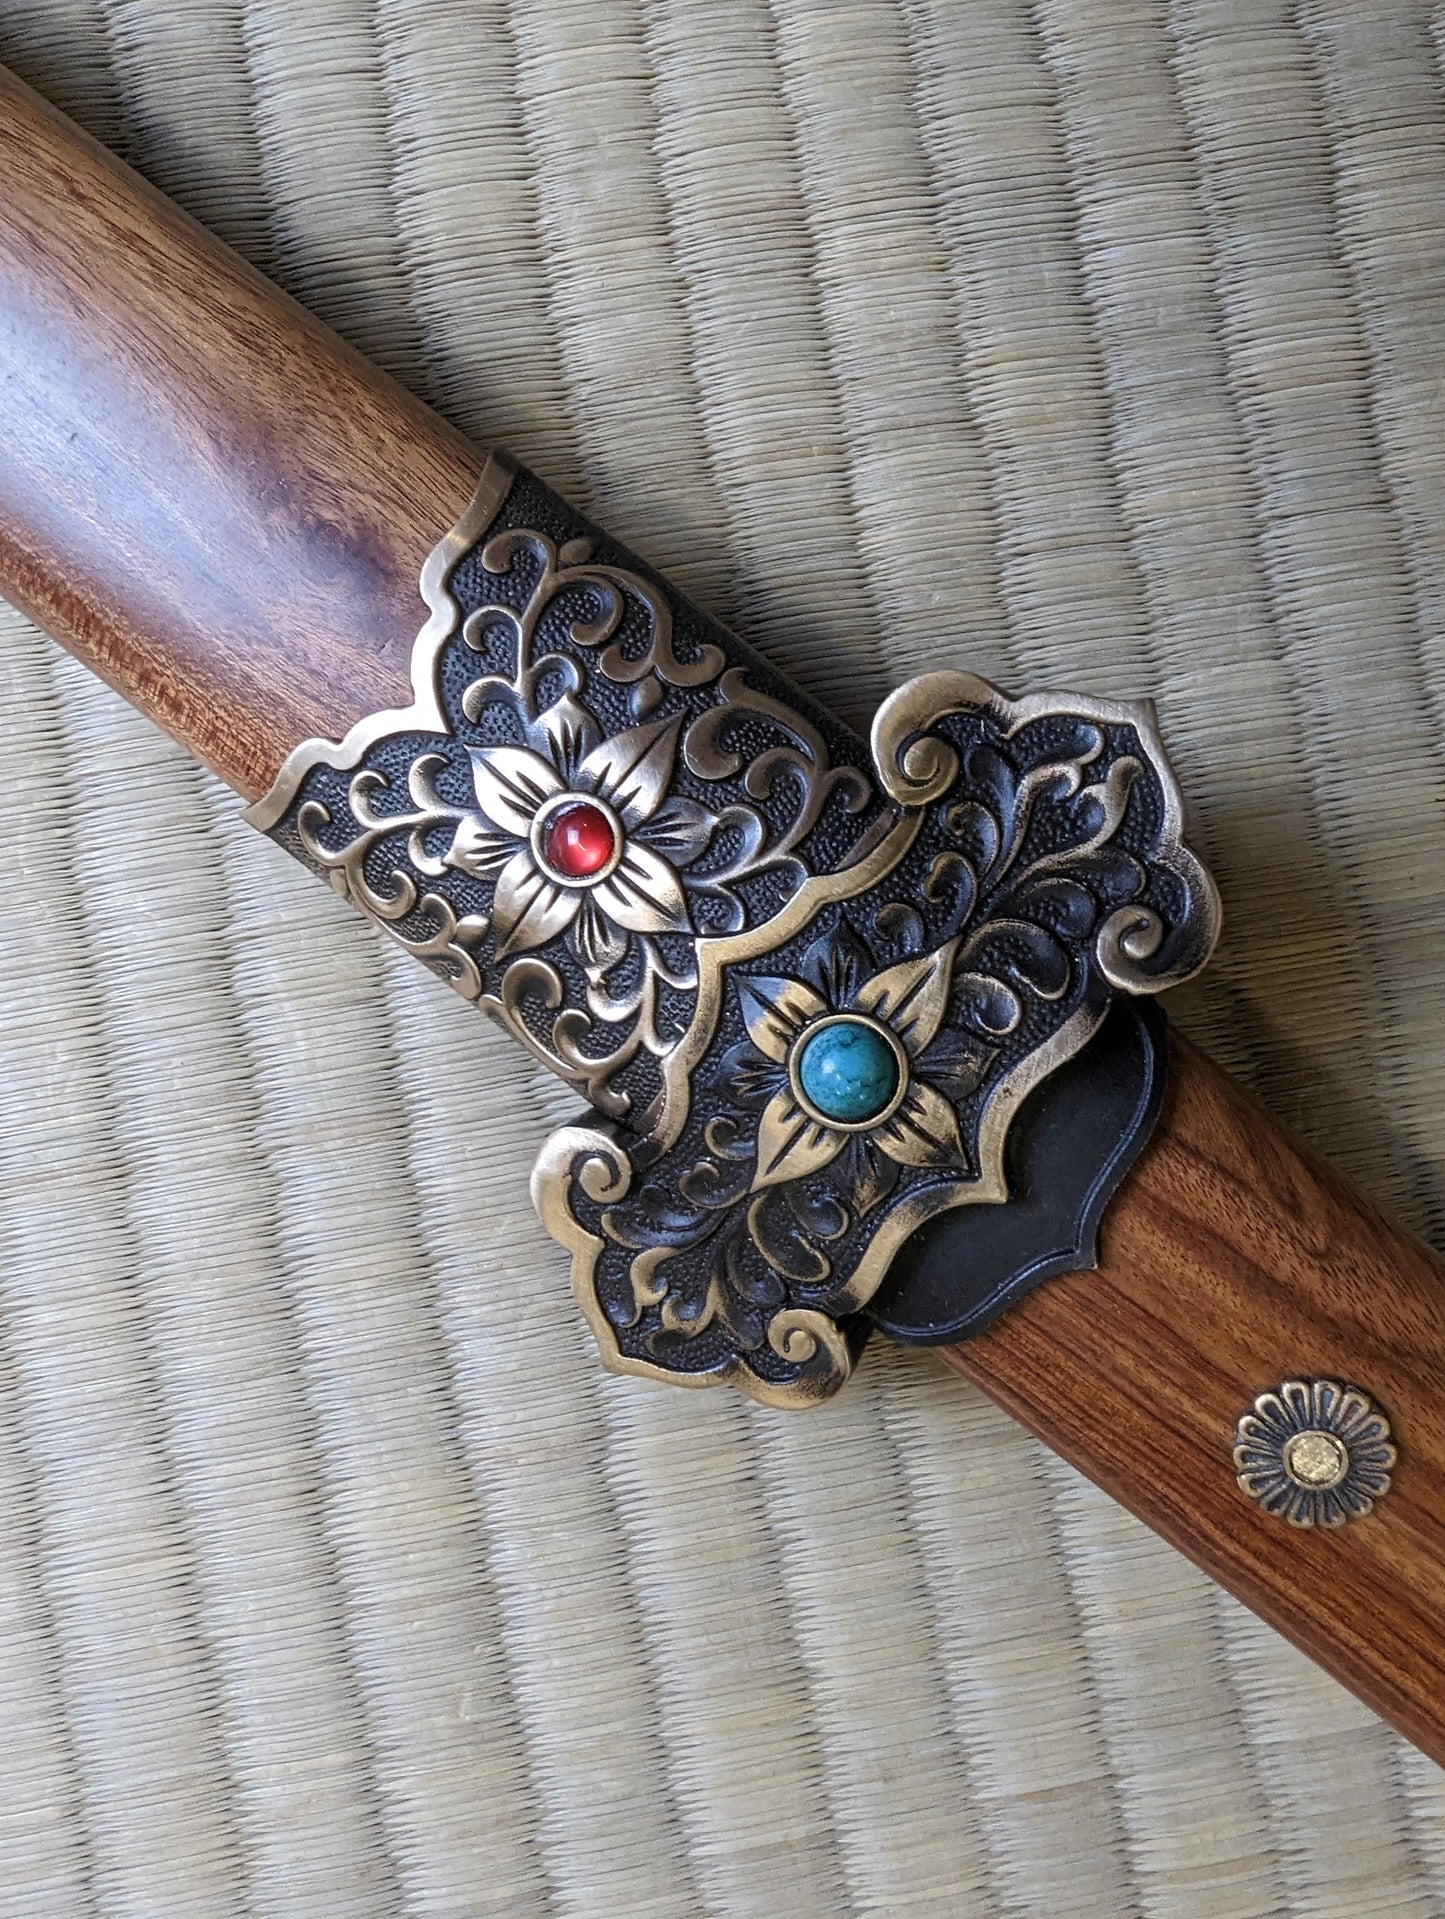 Jian - Phoenix Arms Tang Dynasty Damascus, Brass fittings